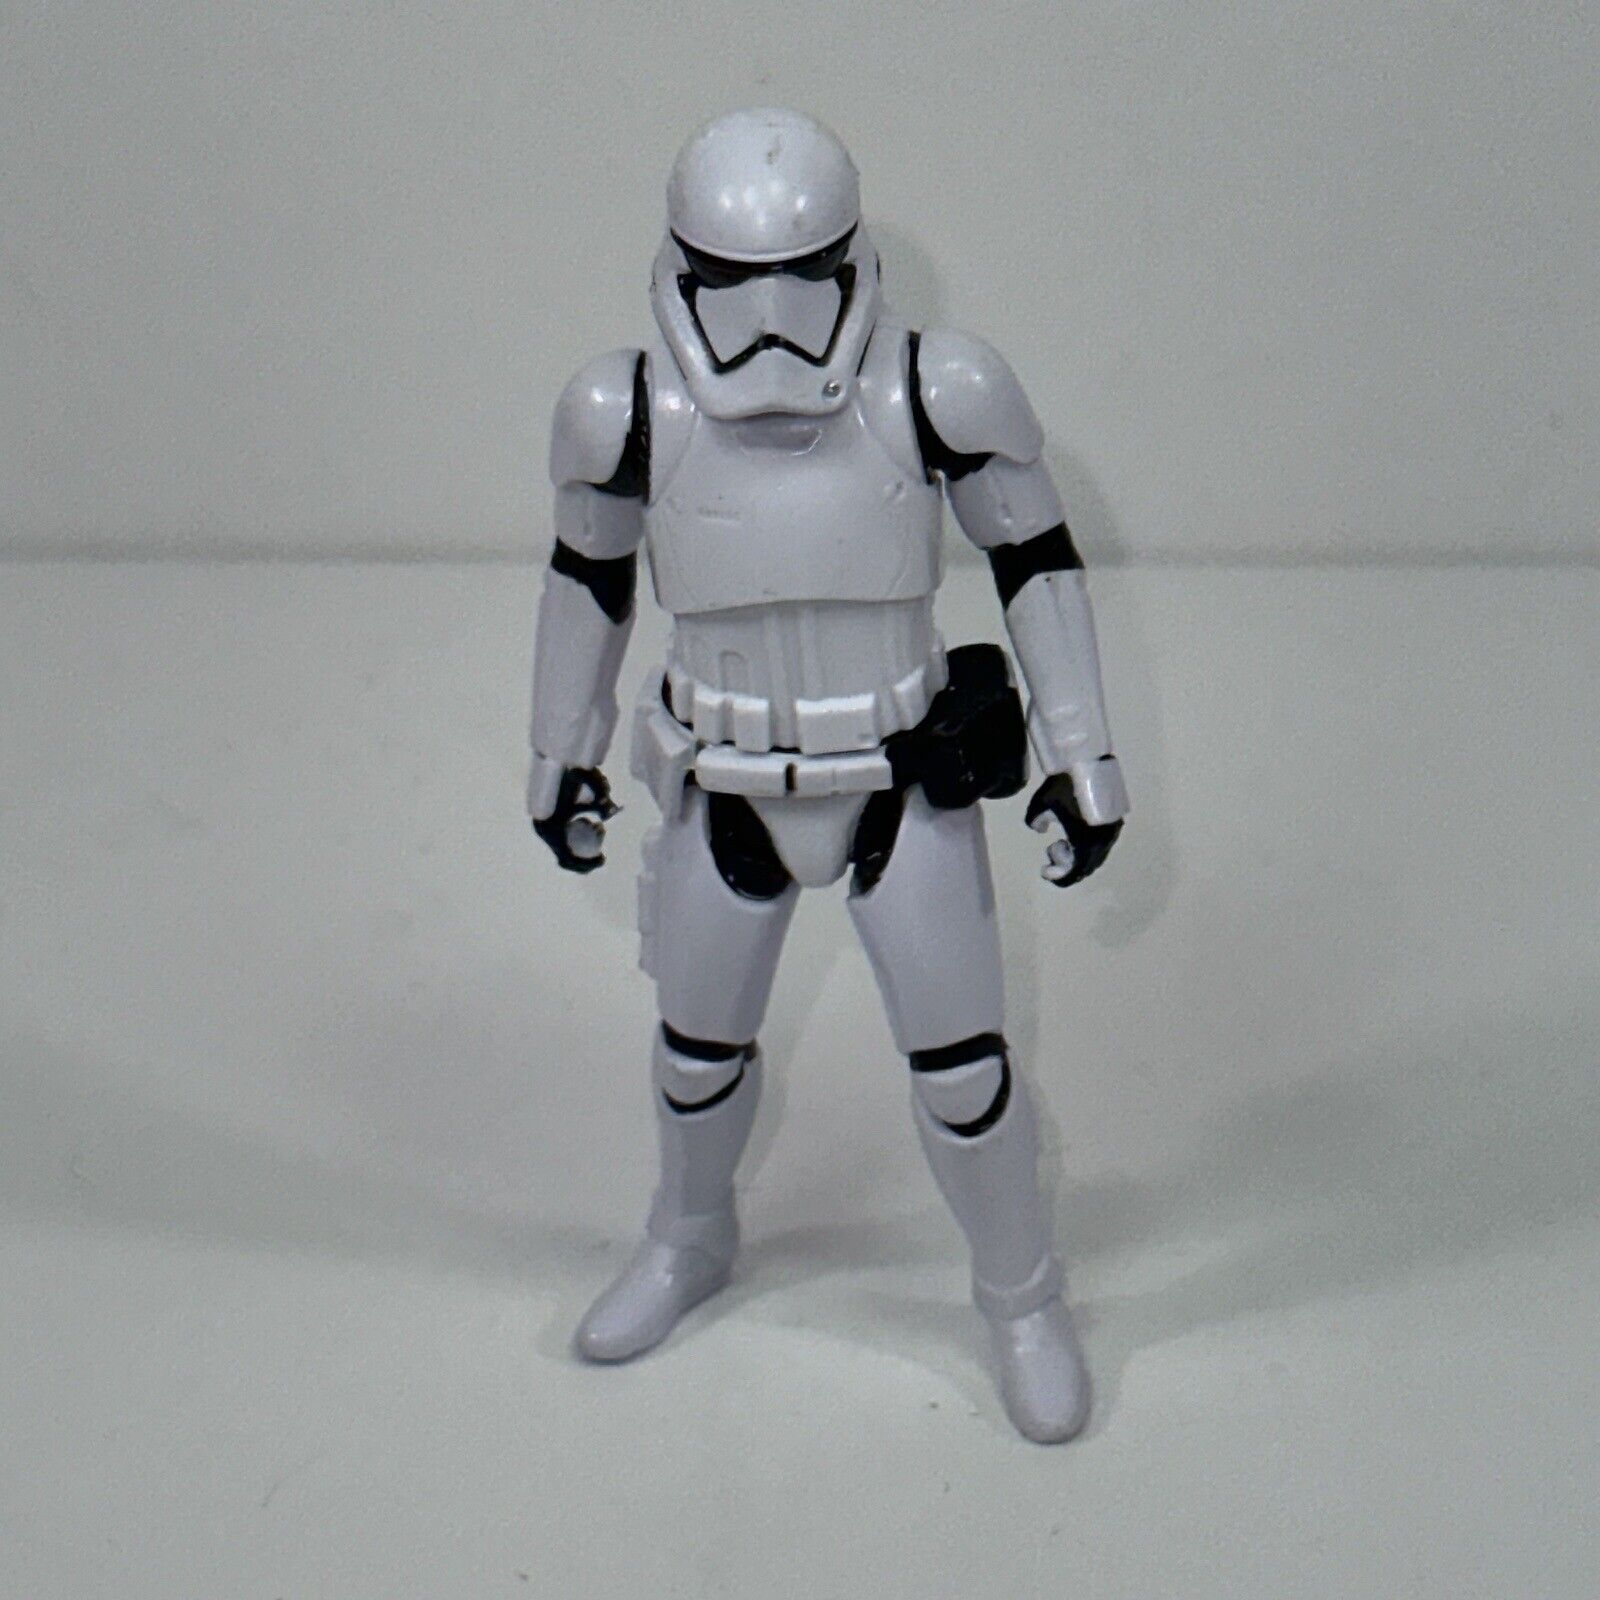 Star Wars Action Figure Force Link First Order Stormtrooper 3.75" C-1508 Loose